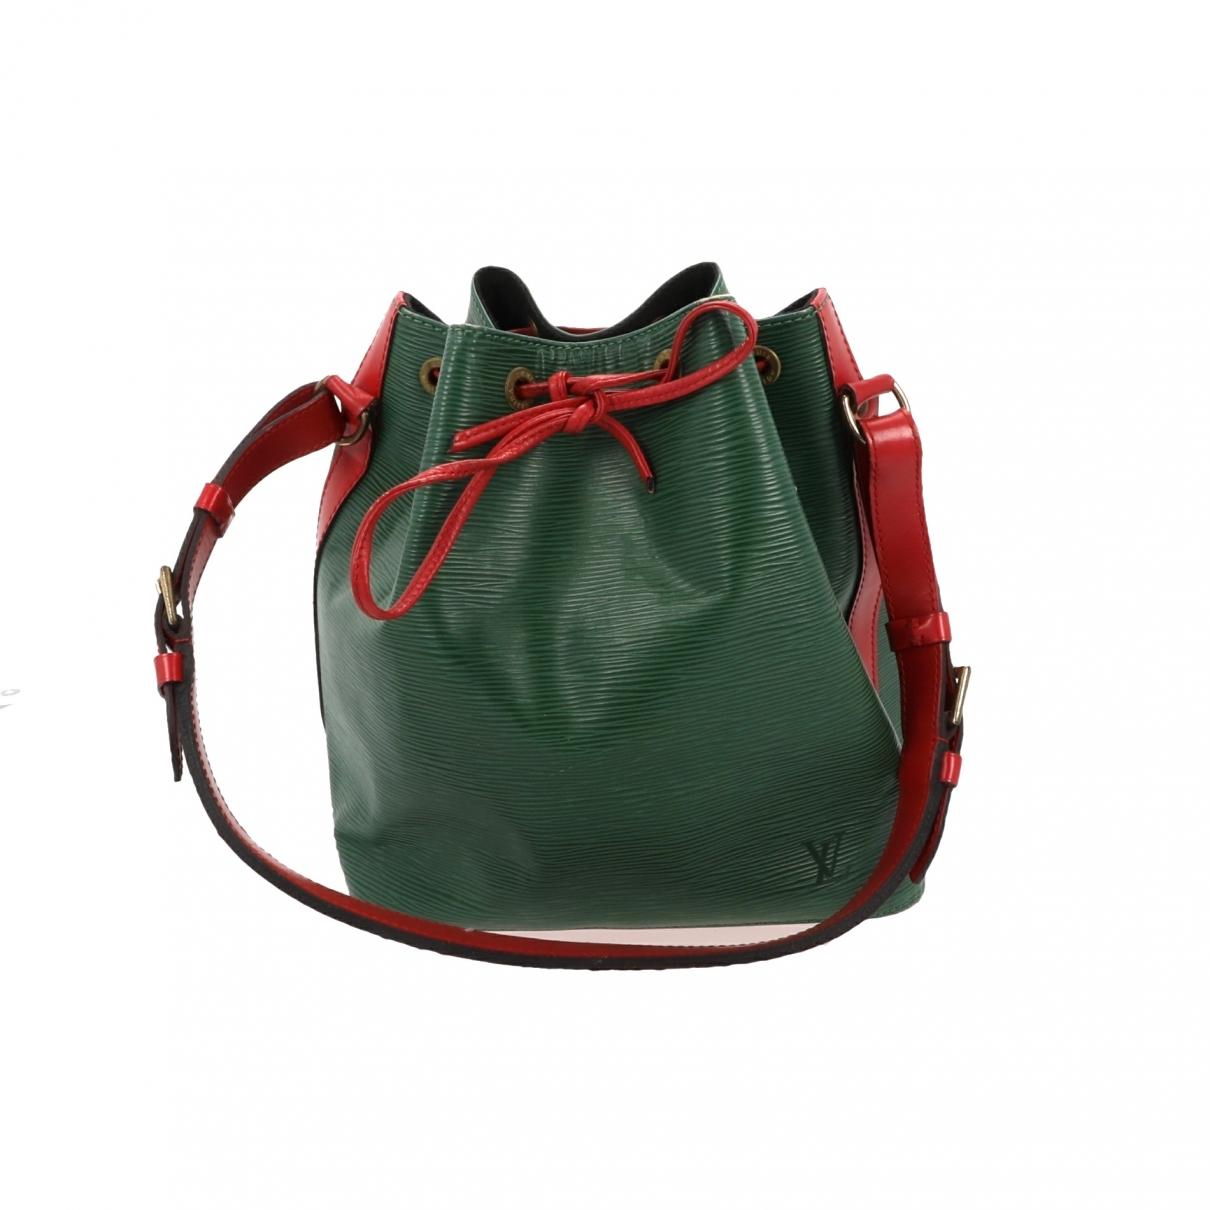 Lyst - Louis Vuitton Vintage Noé Green Leather Handbag in Green